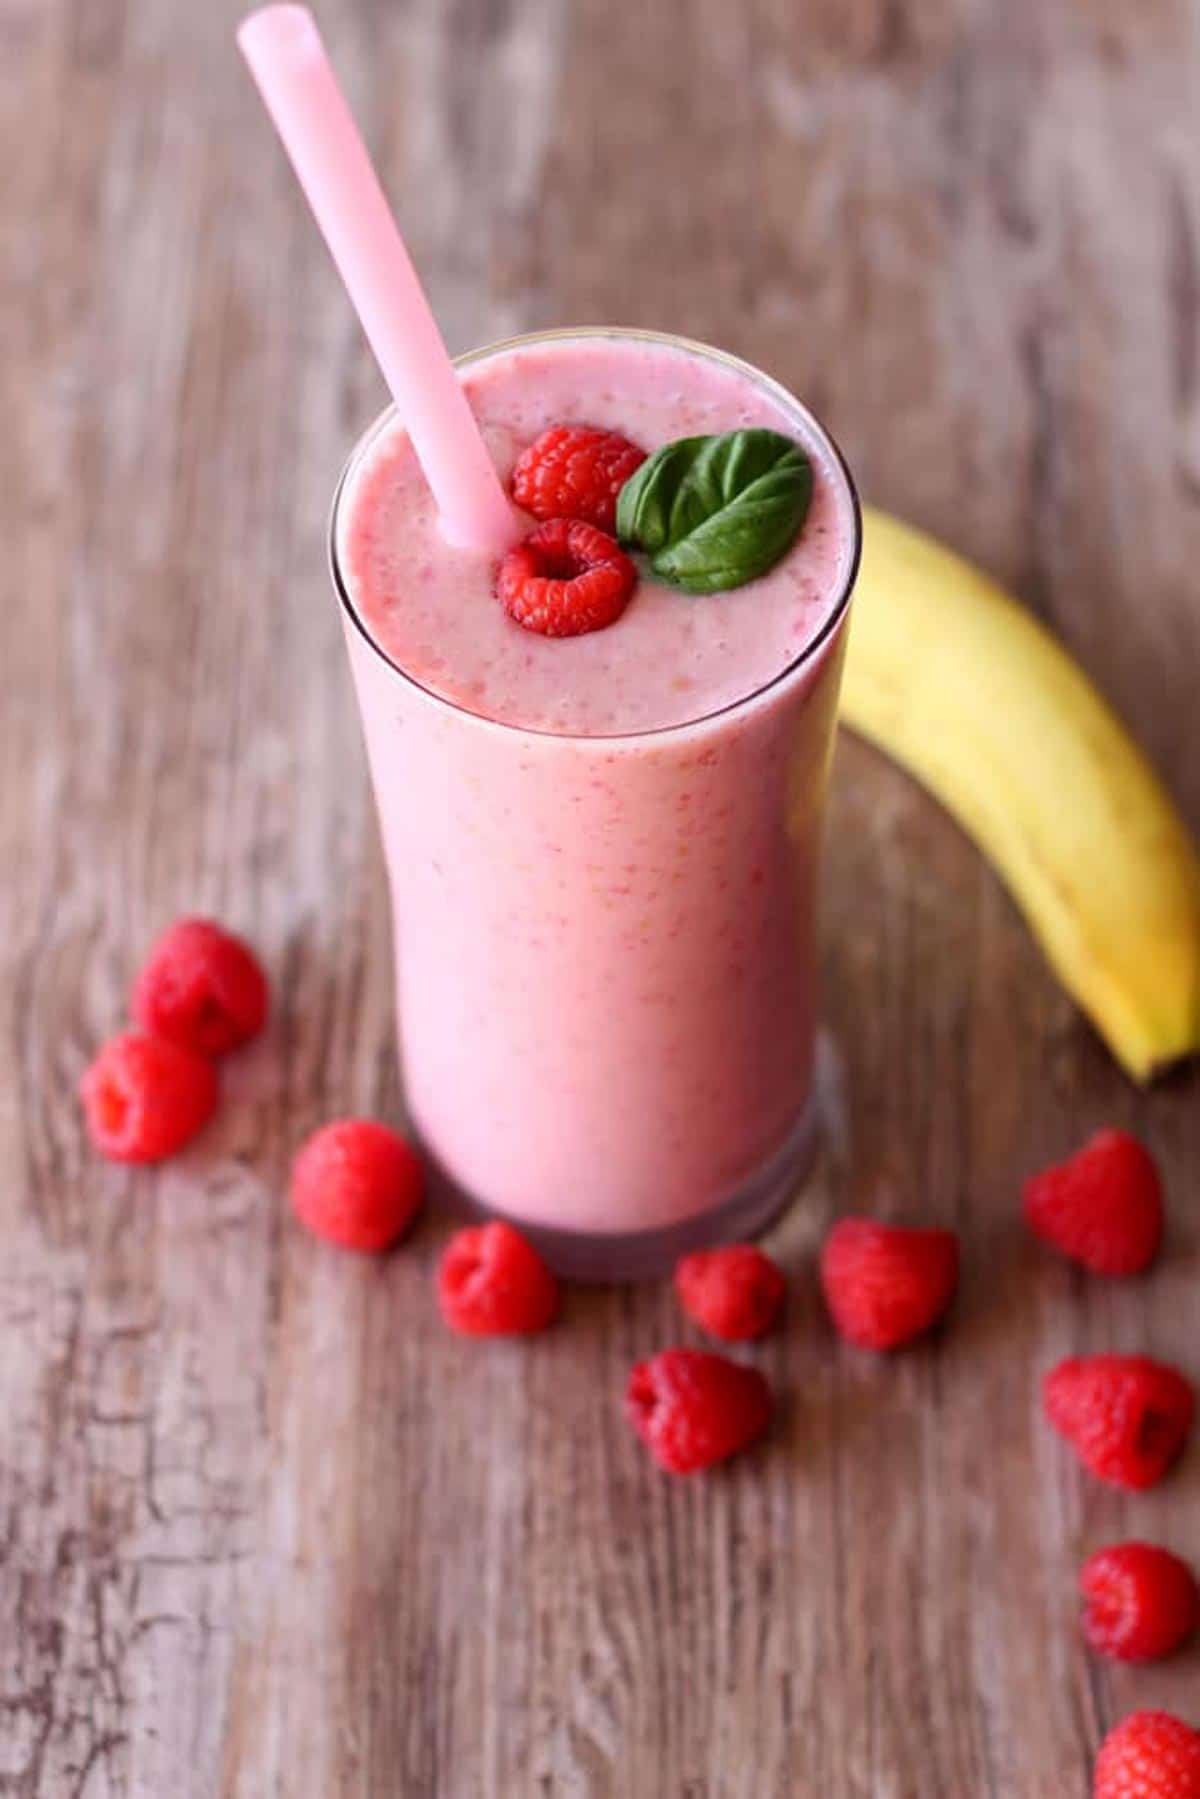 5-Minute Raspberry Banana Smoothie - Real Food Whole Life